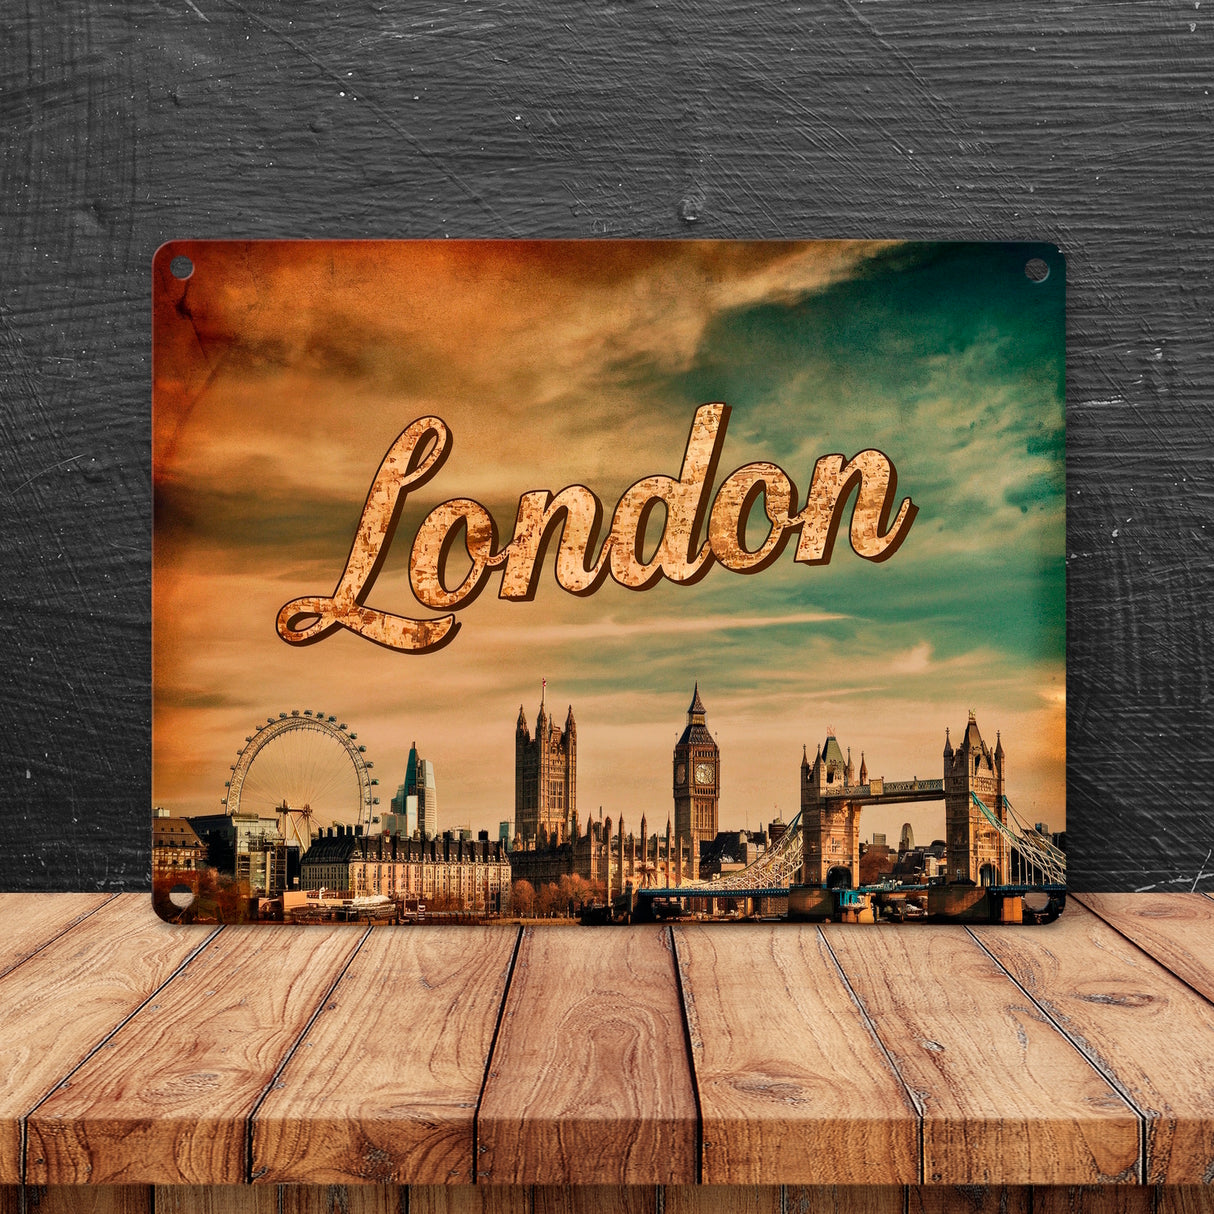 Londoner Skyline Metallschild in 15x20 cm - London